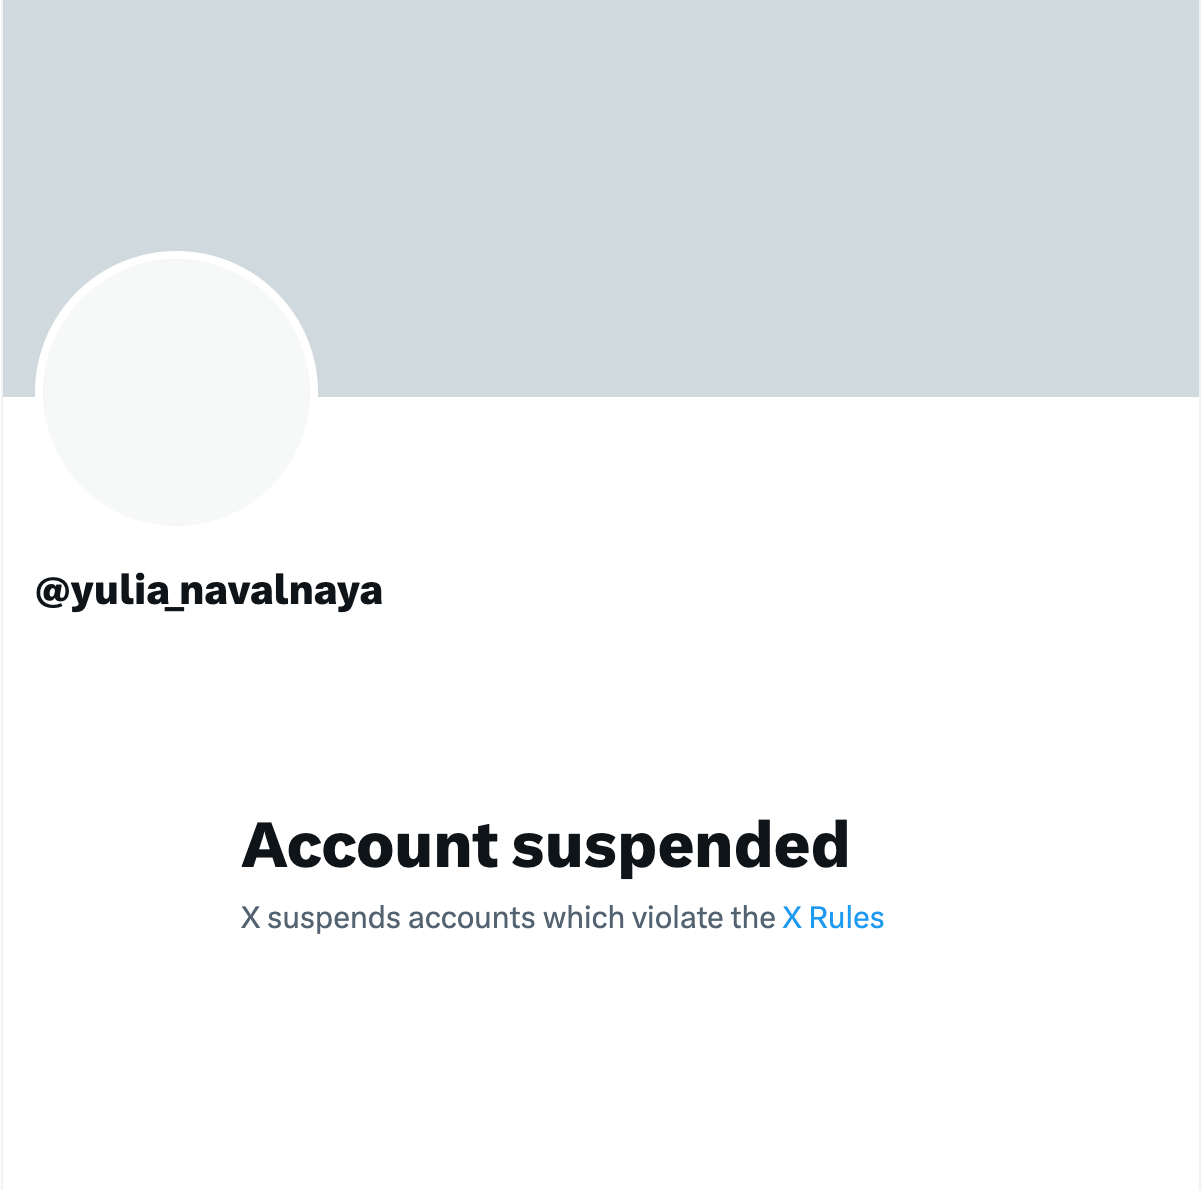 X, formerly Twitter, has suspended the account of Alexei Navalny’s widow Yulia Navalnaya